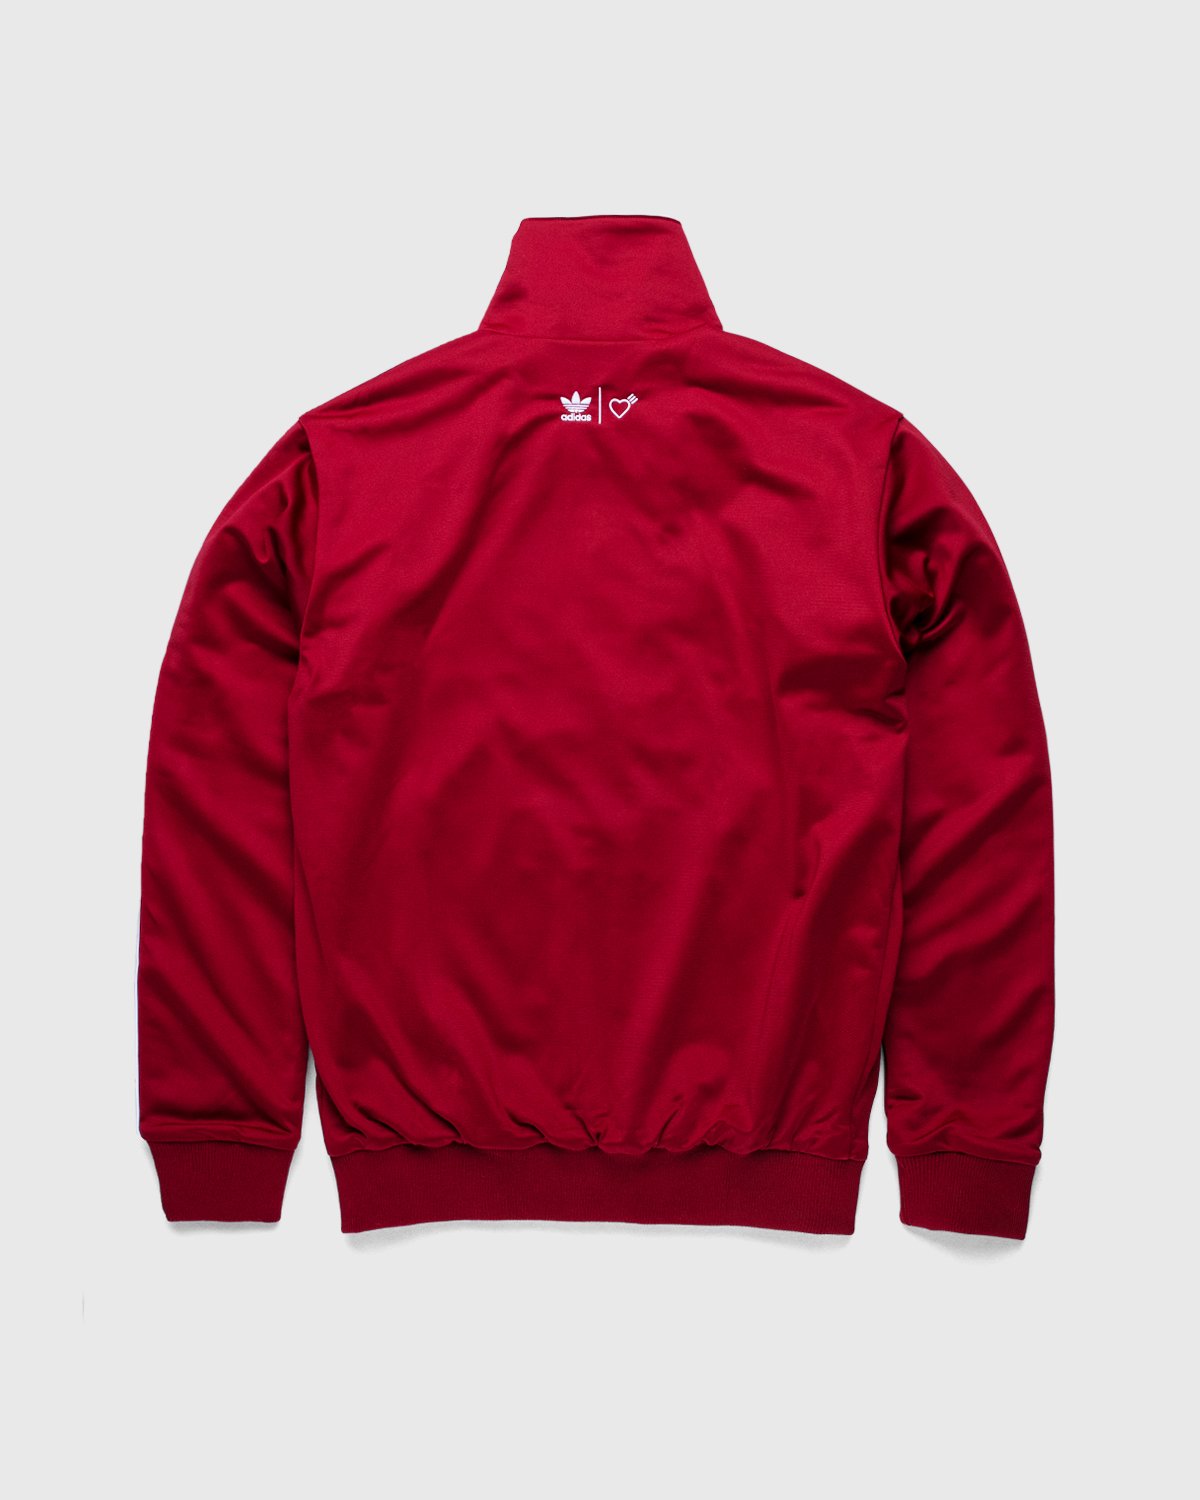 adidas Originals x Human Made - Firebird Track Top Burgundy - Clothing - Red - Image 3